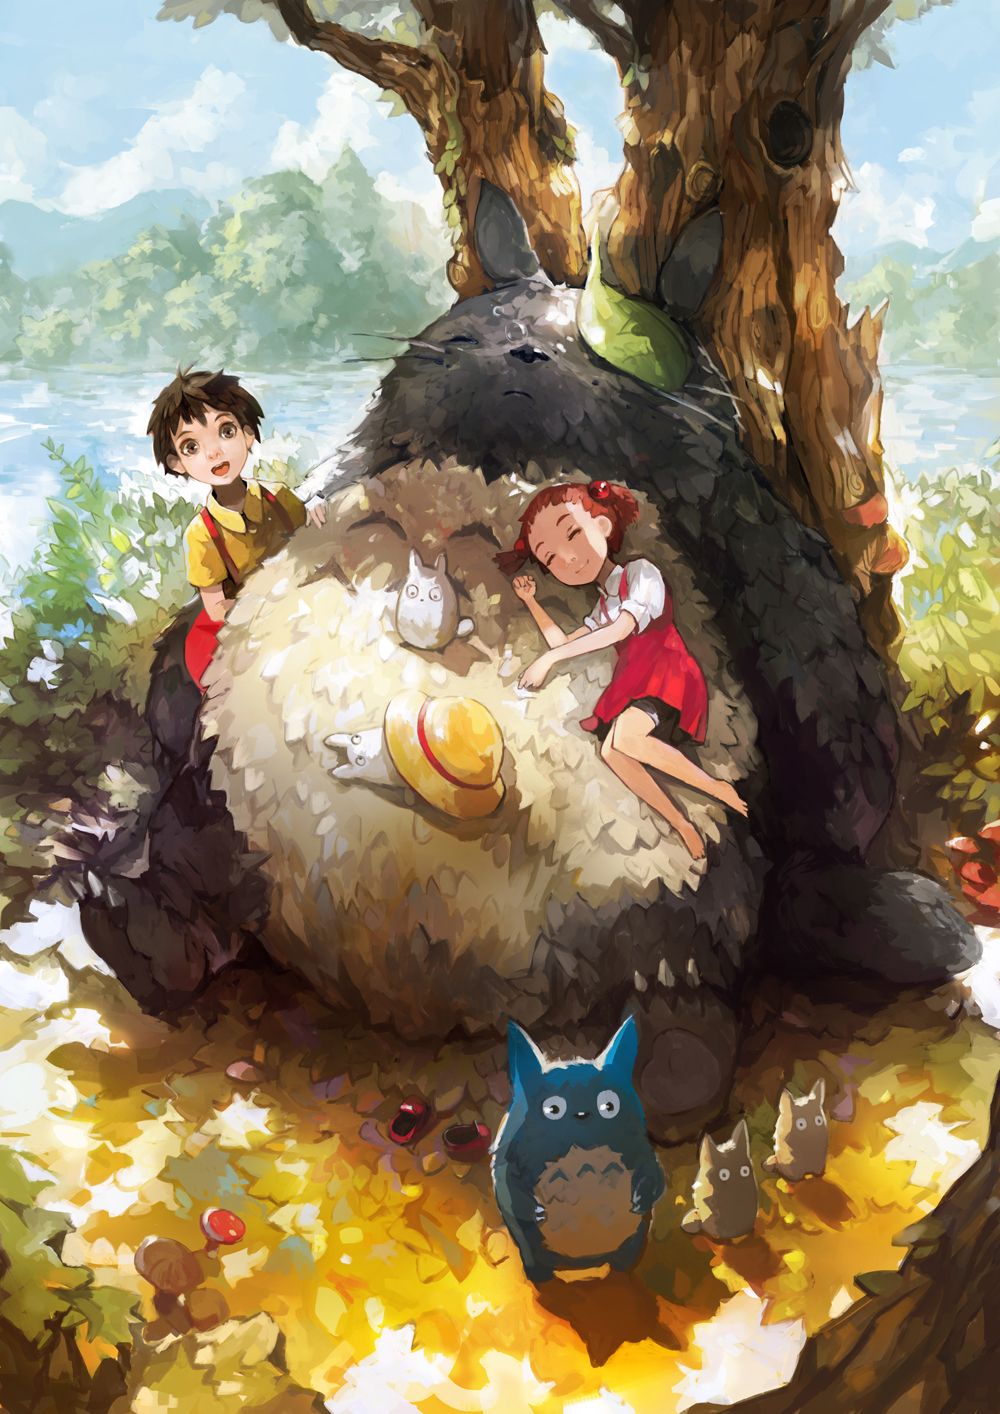 Tonari no Totoro (My Neighbor Totoro), Mobile Wallpaper. Anime Image Board